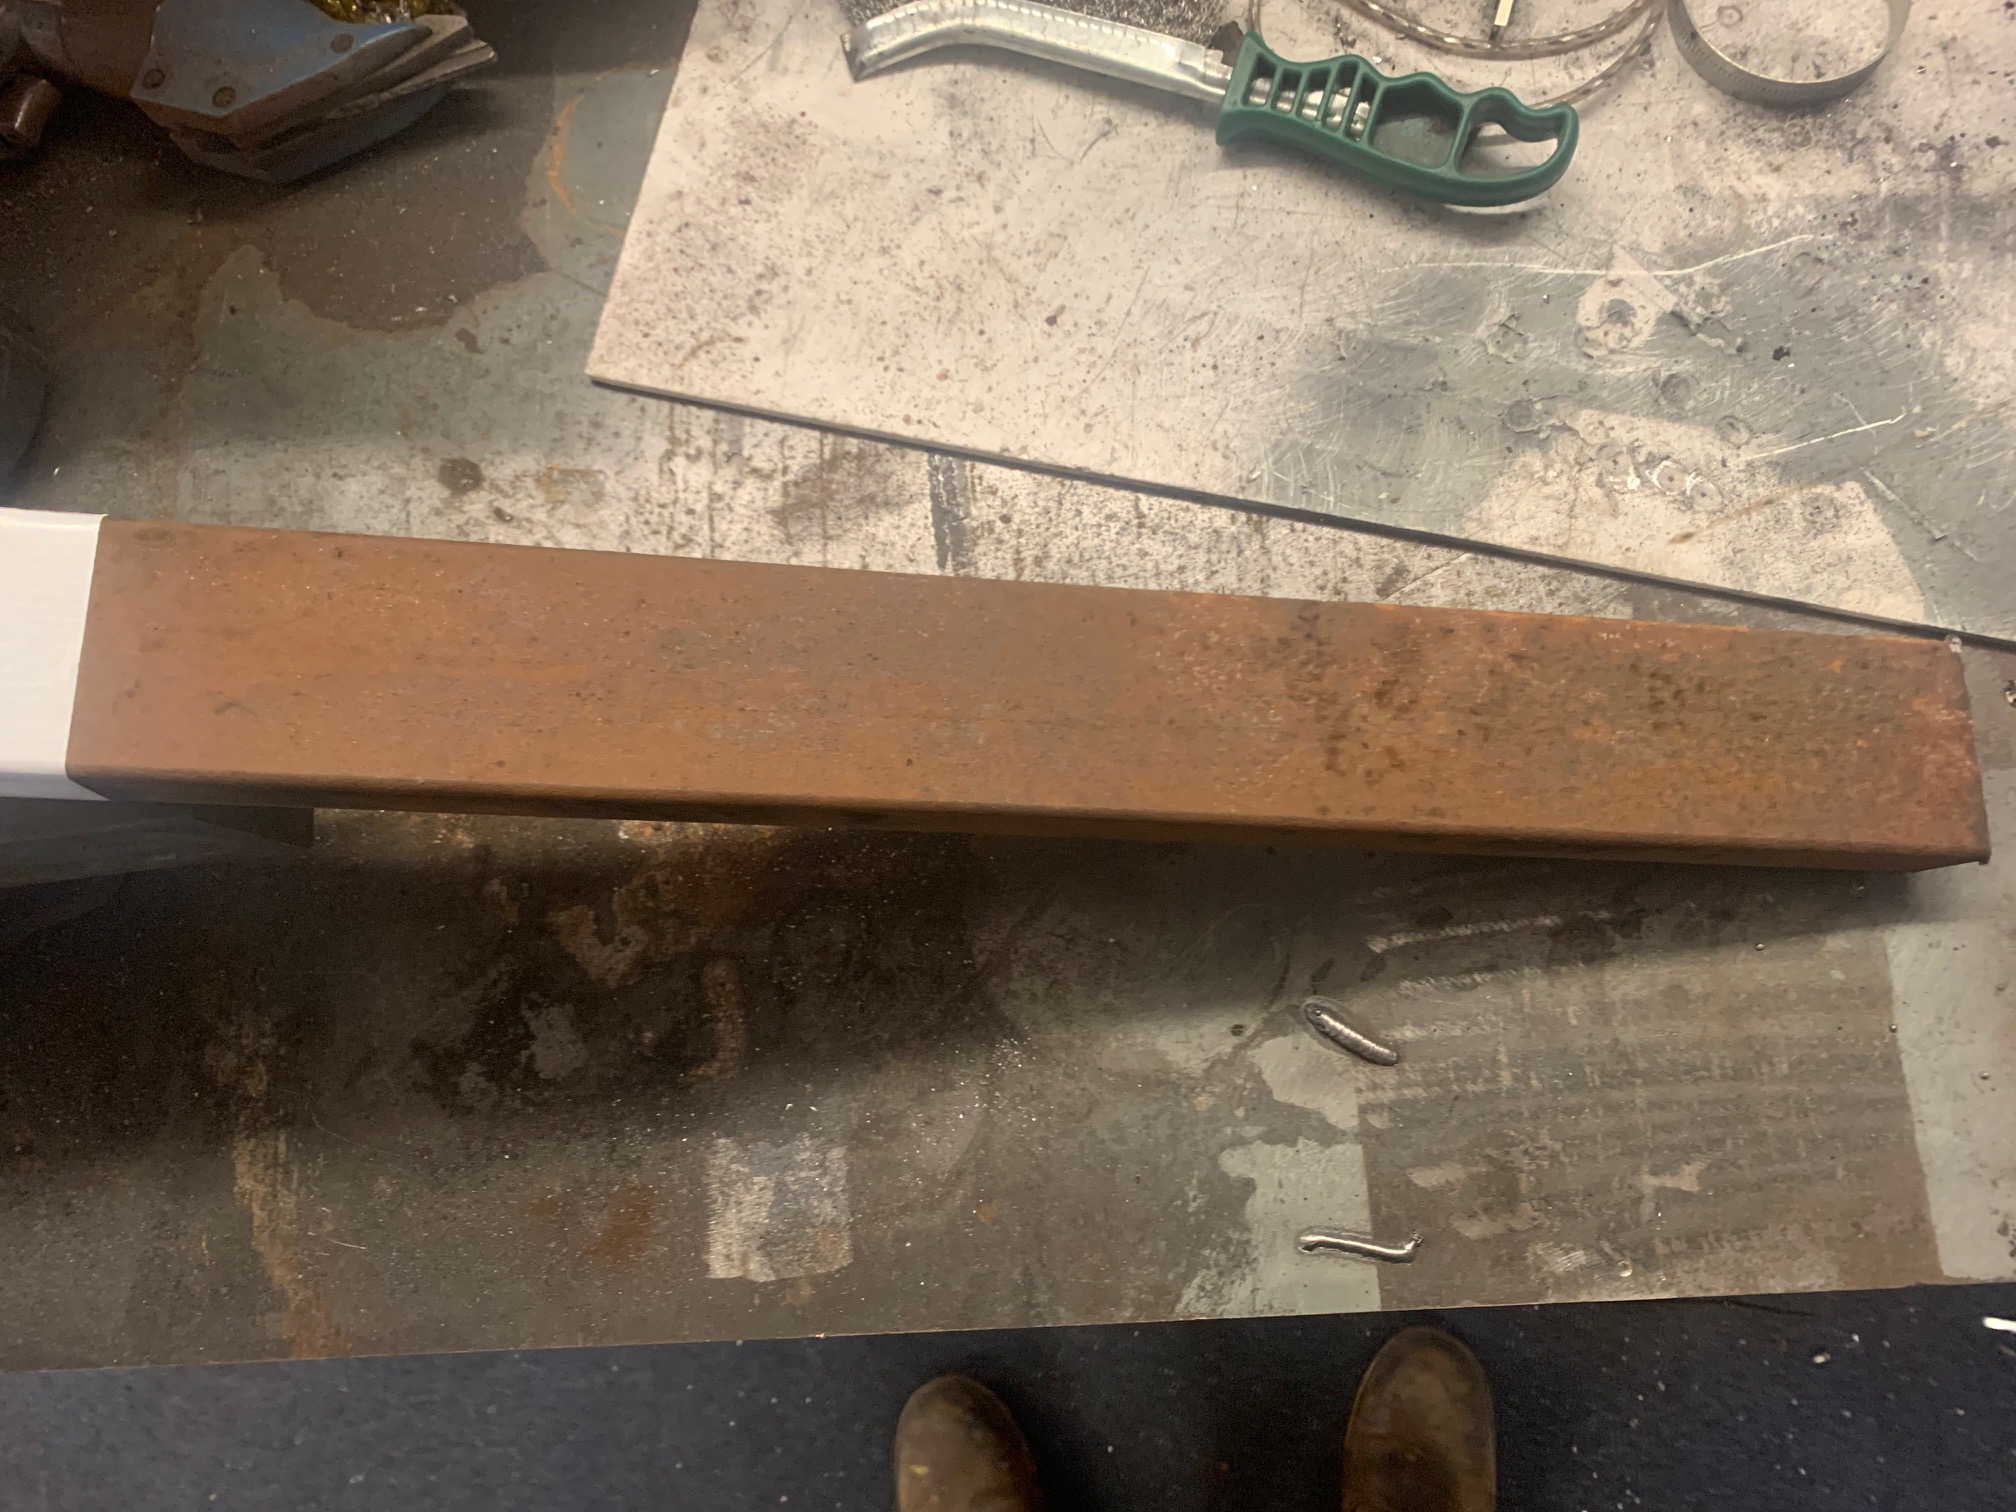 Zinc Rich Primer testing on Rusty steel